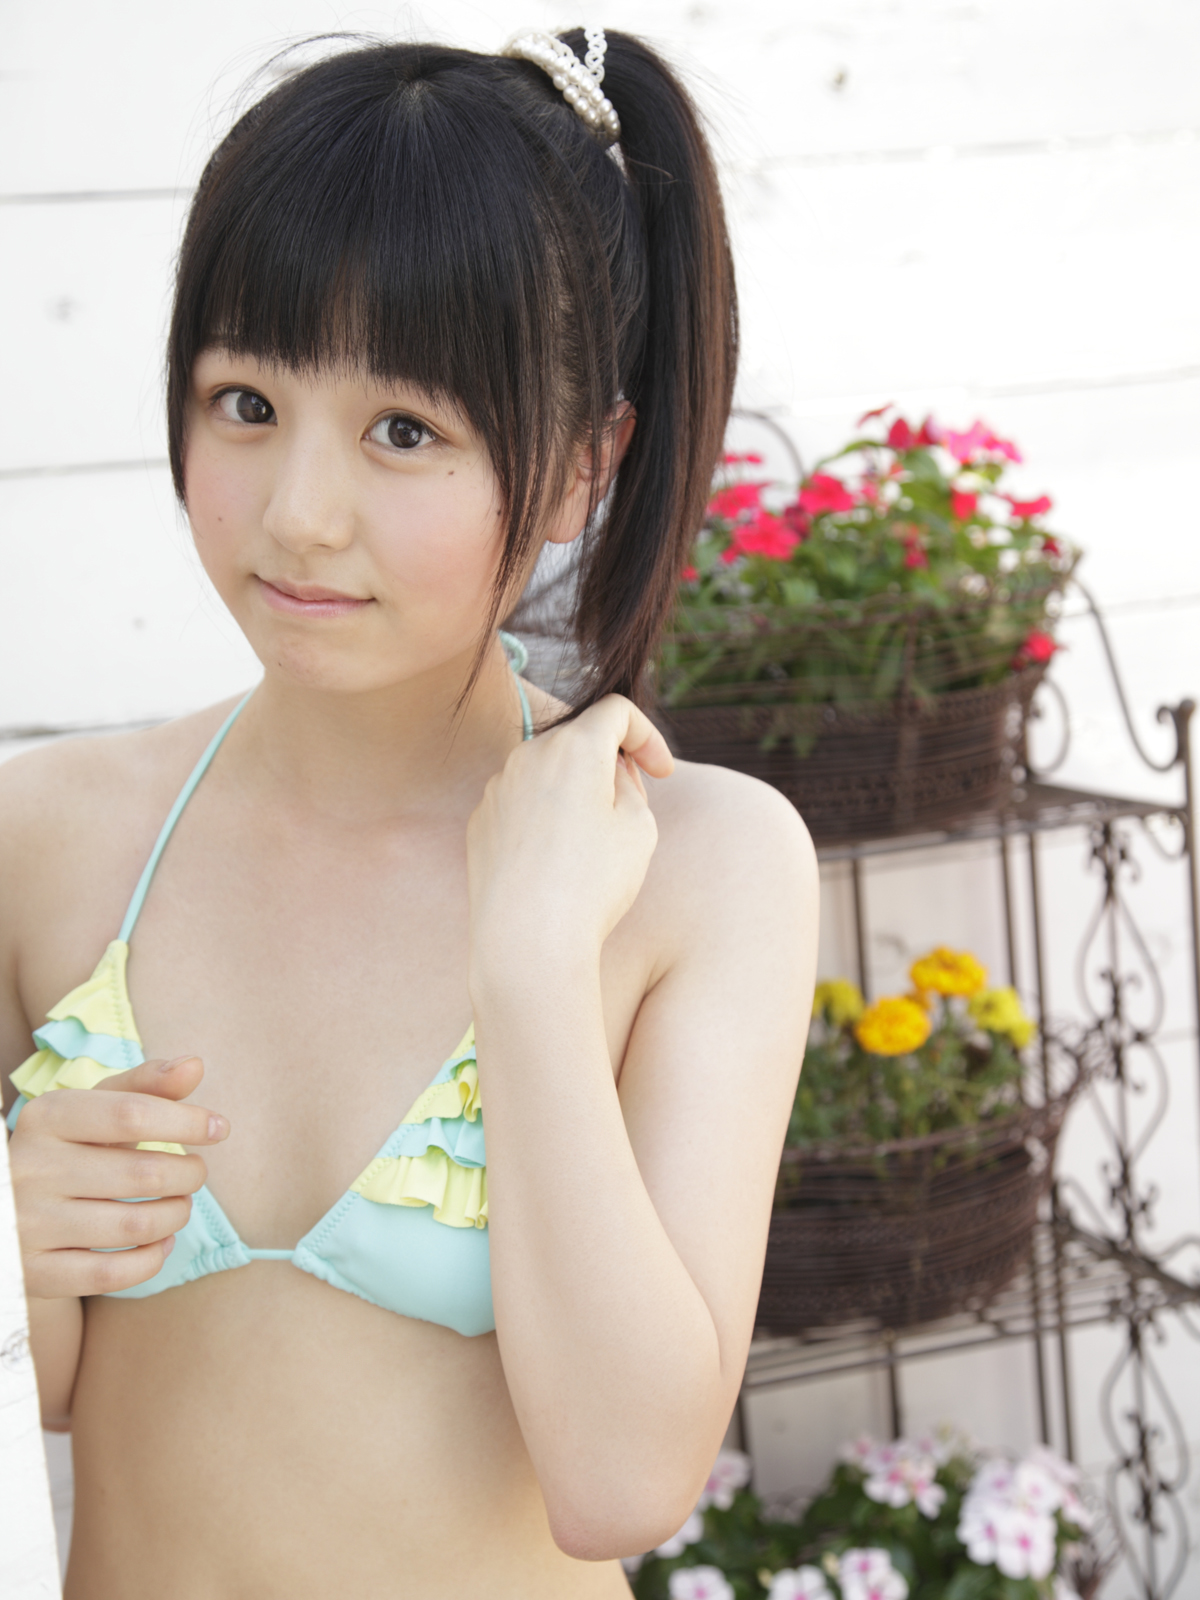 Pretty Japanese Girl in sexy bikini. So Cute!!!